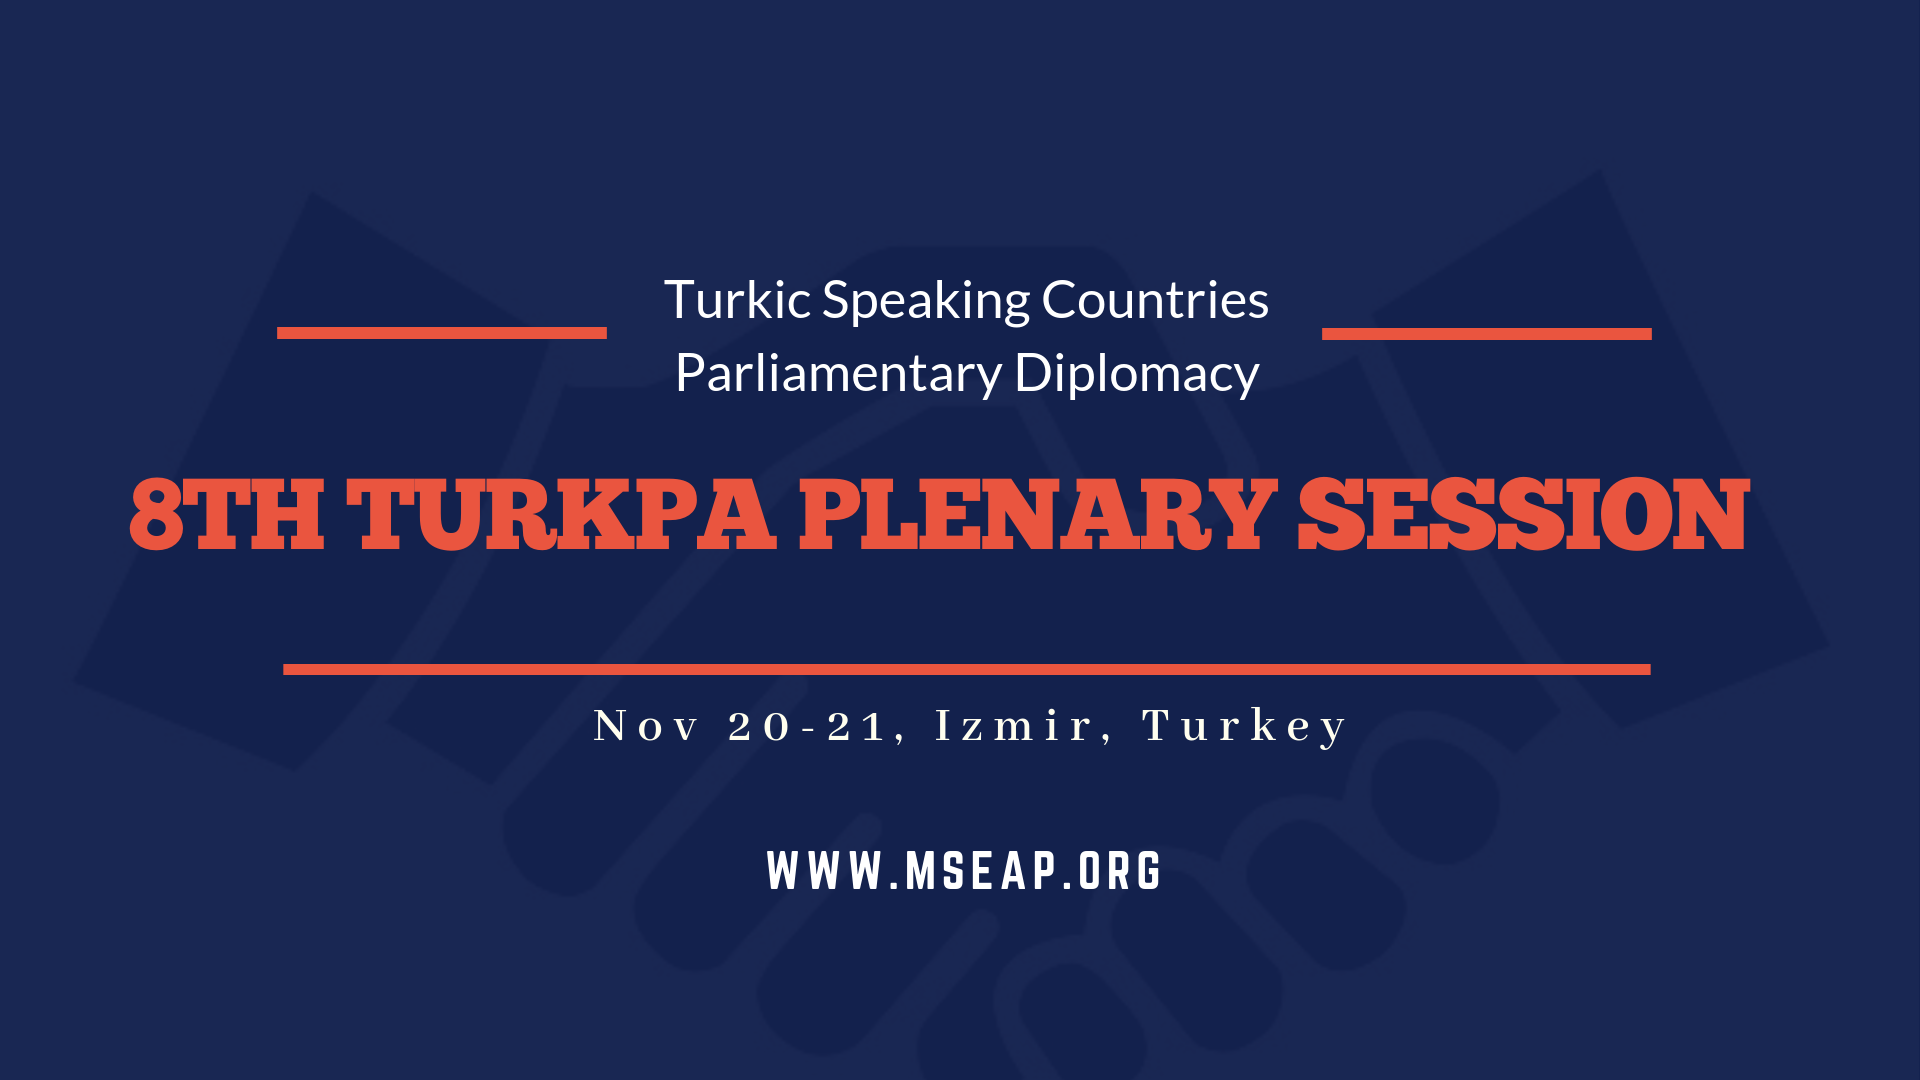 8th TURKPA plenary session held on November 20-21 in Izmir, Turkey